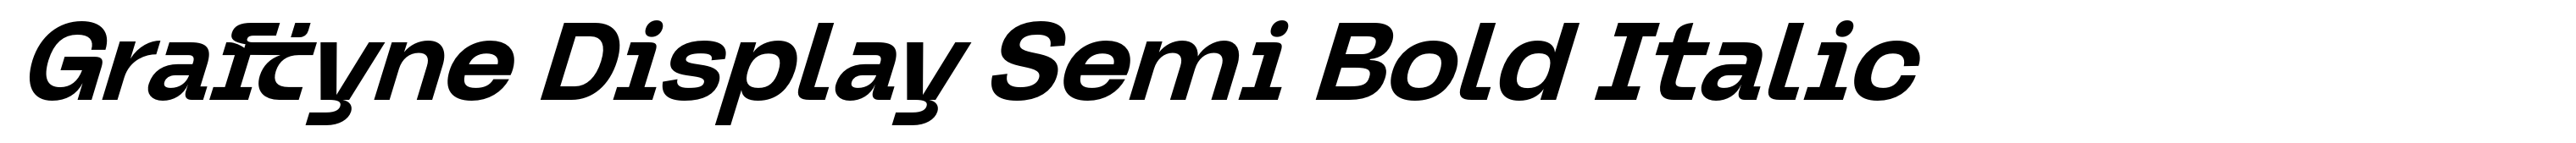 Graftyne Display Semi Bold Italic